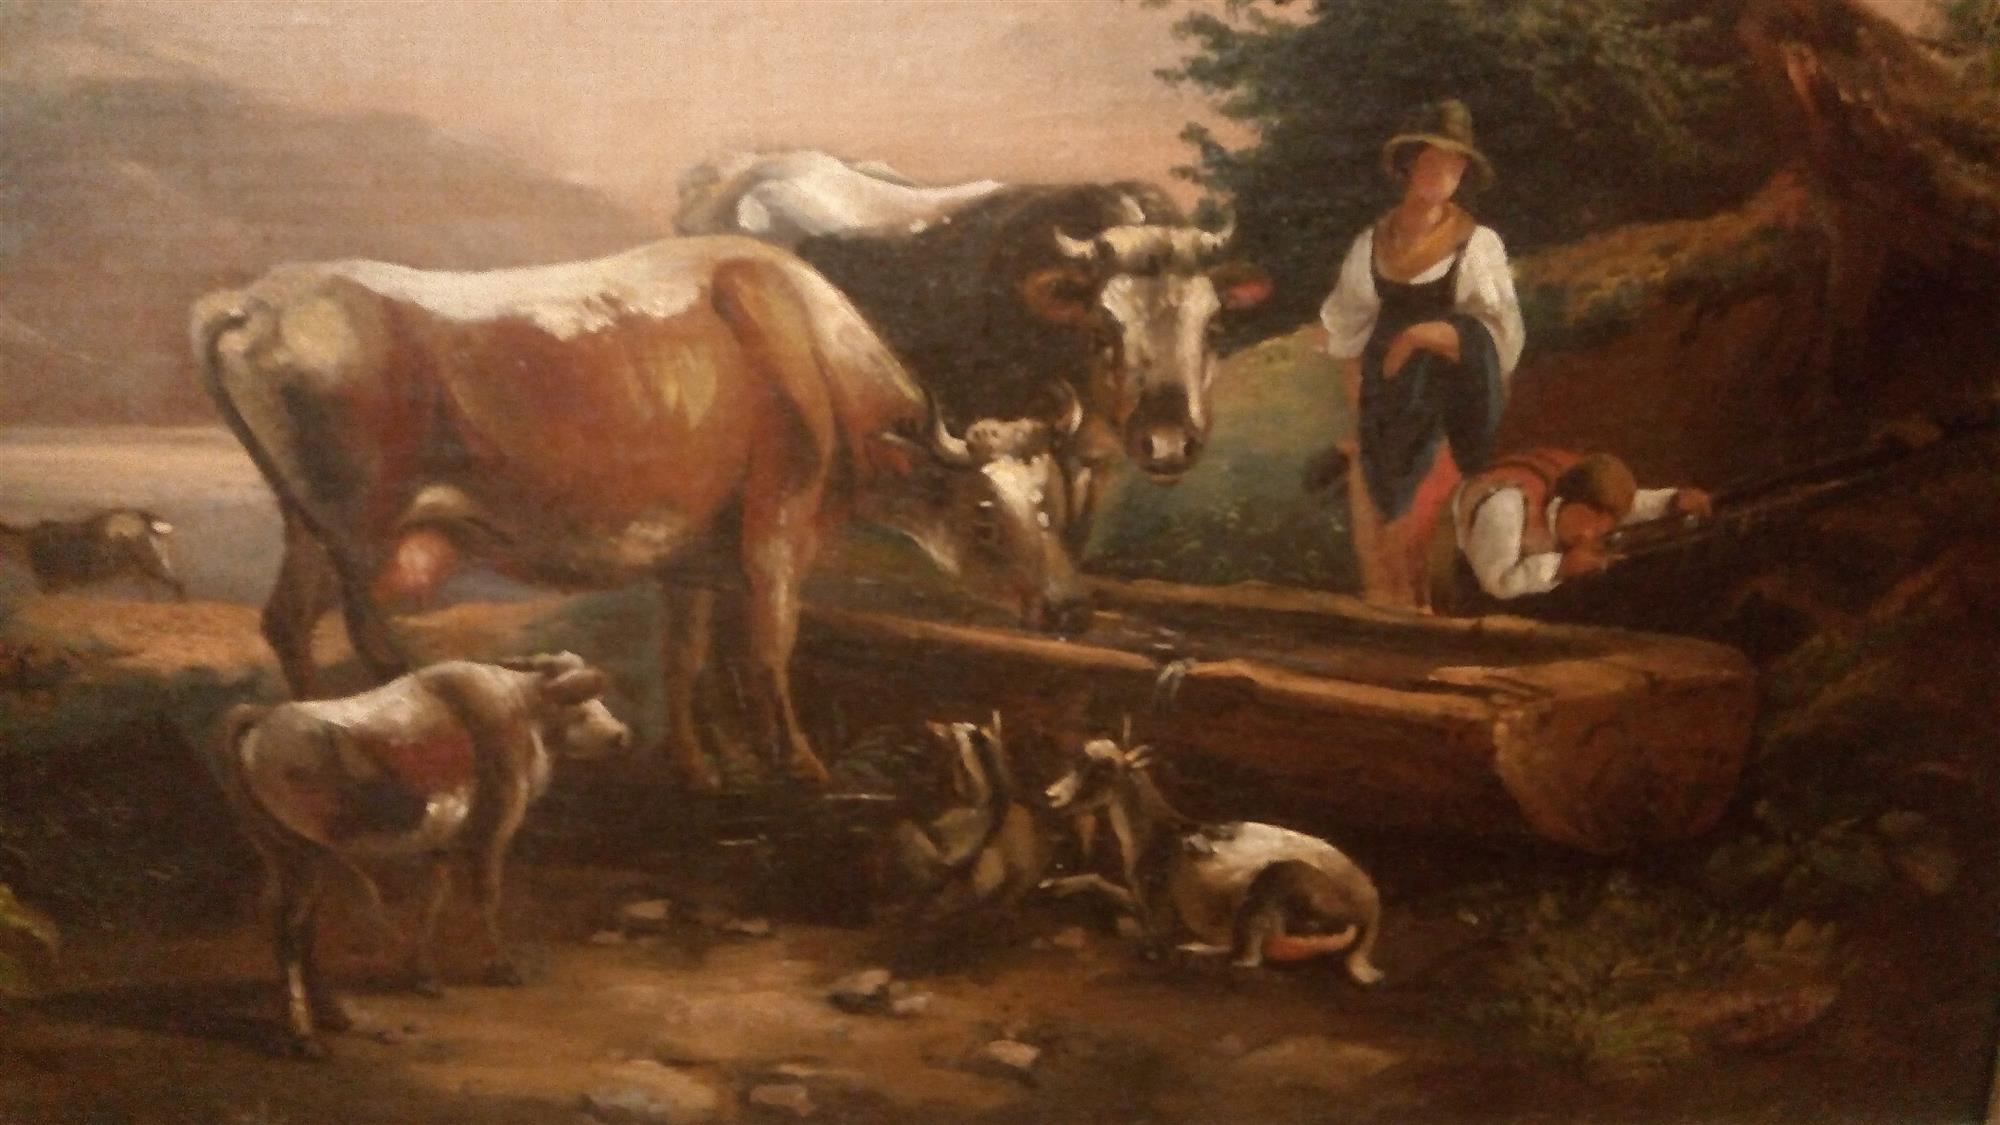 Pair of paintings '800 rural subject